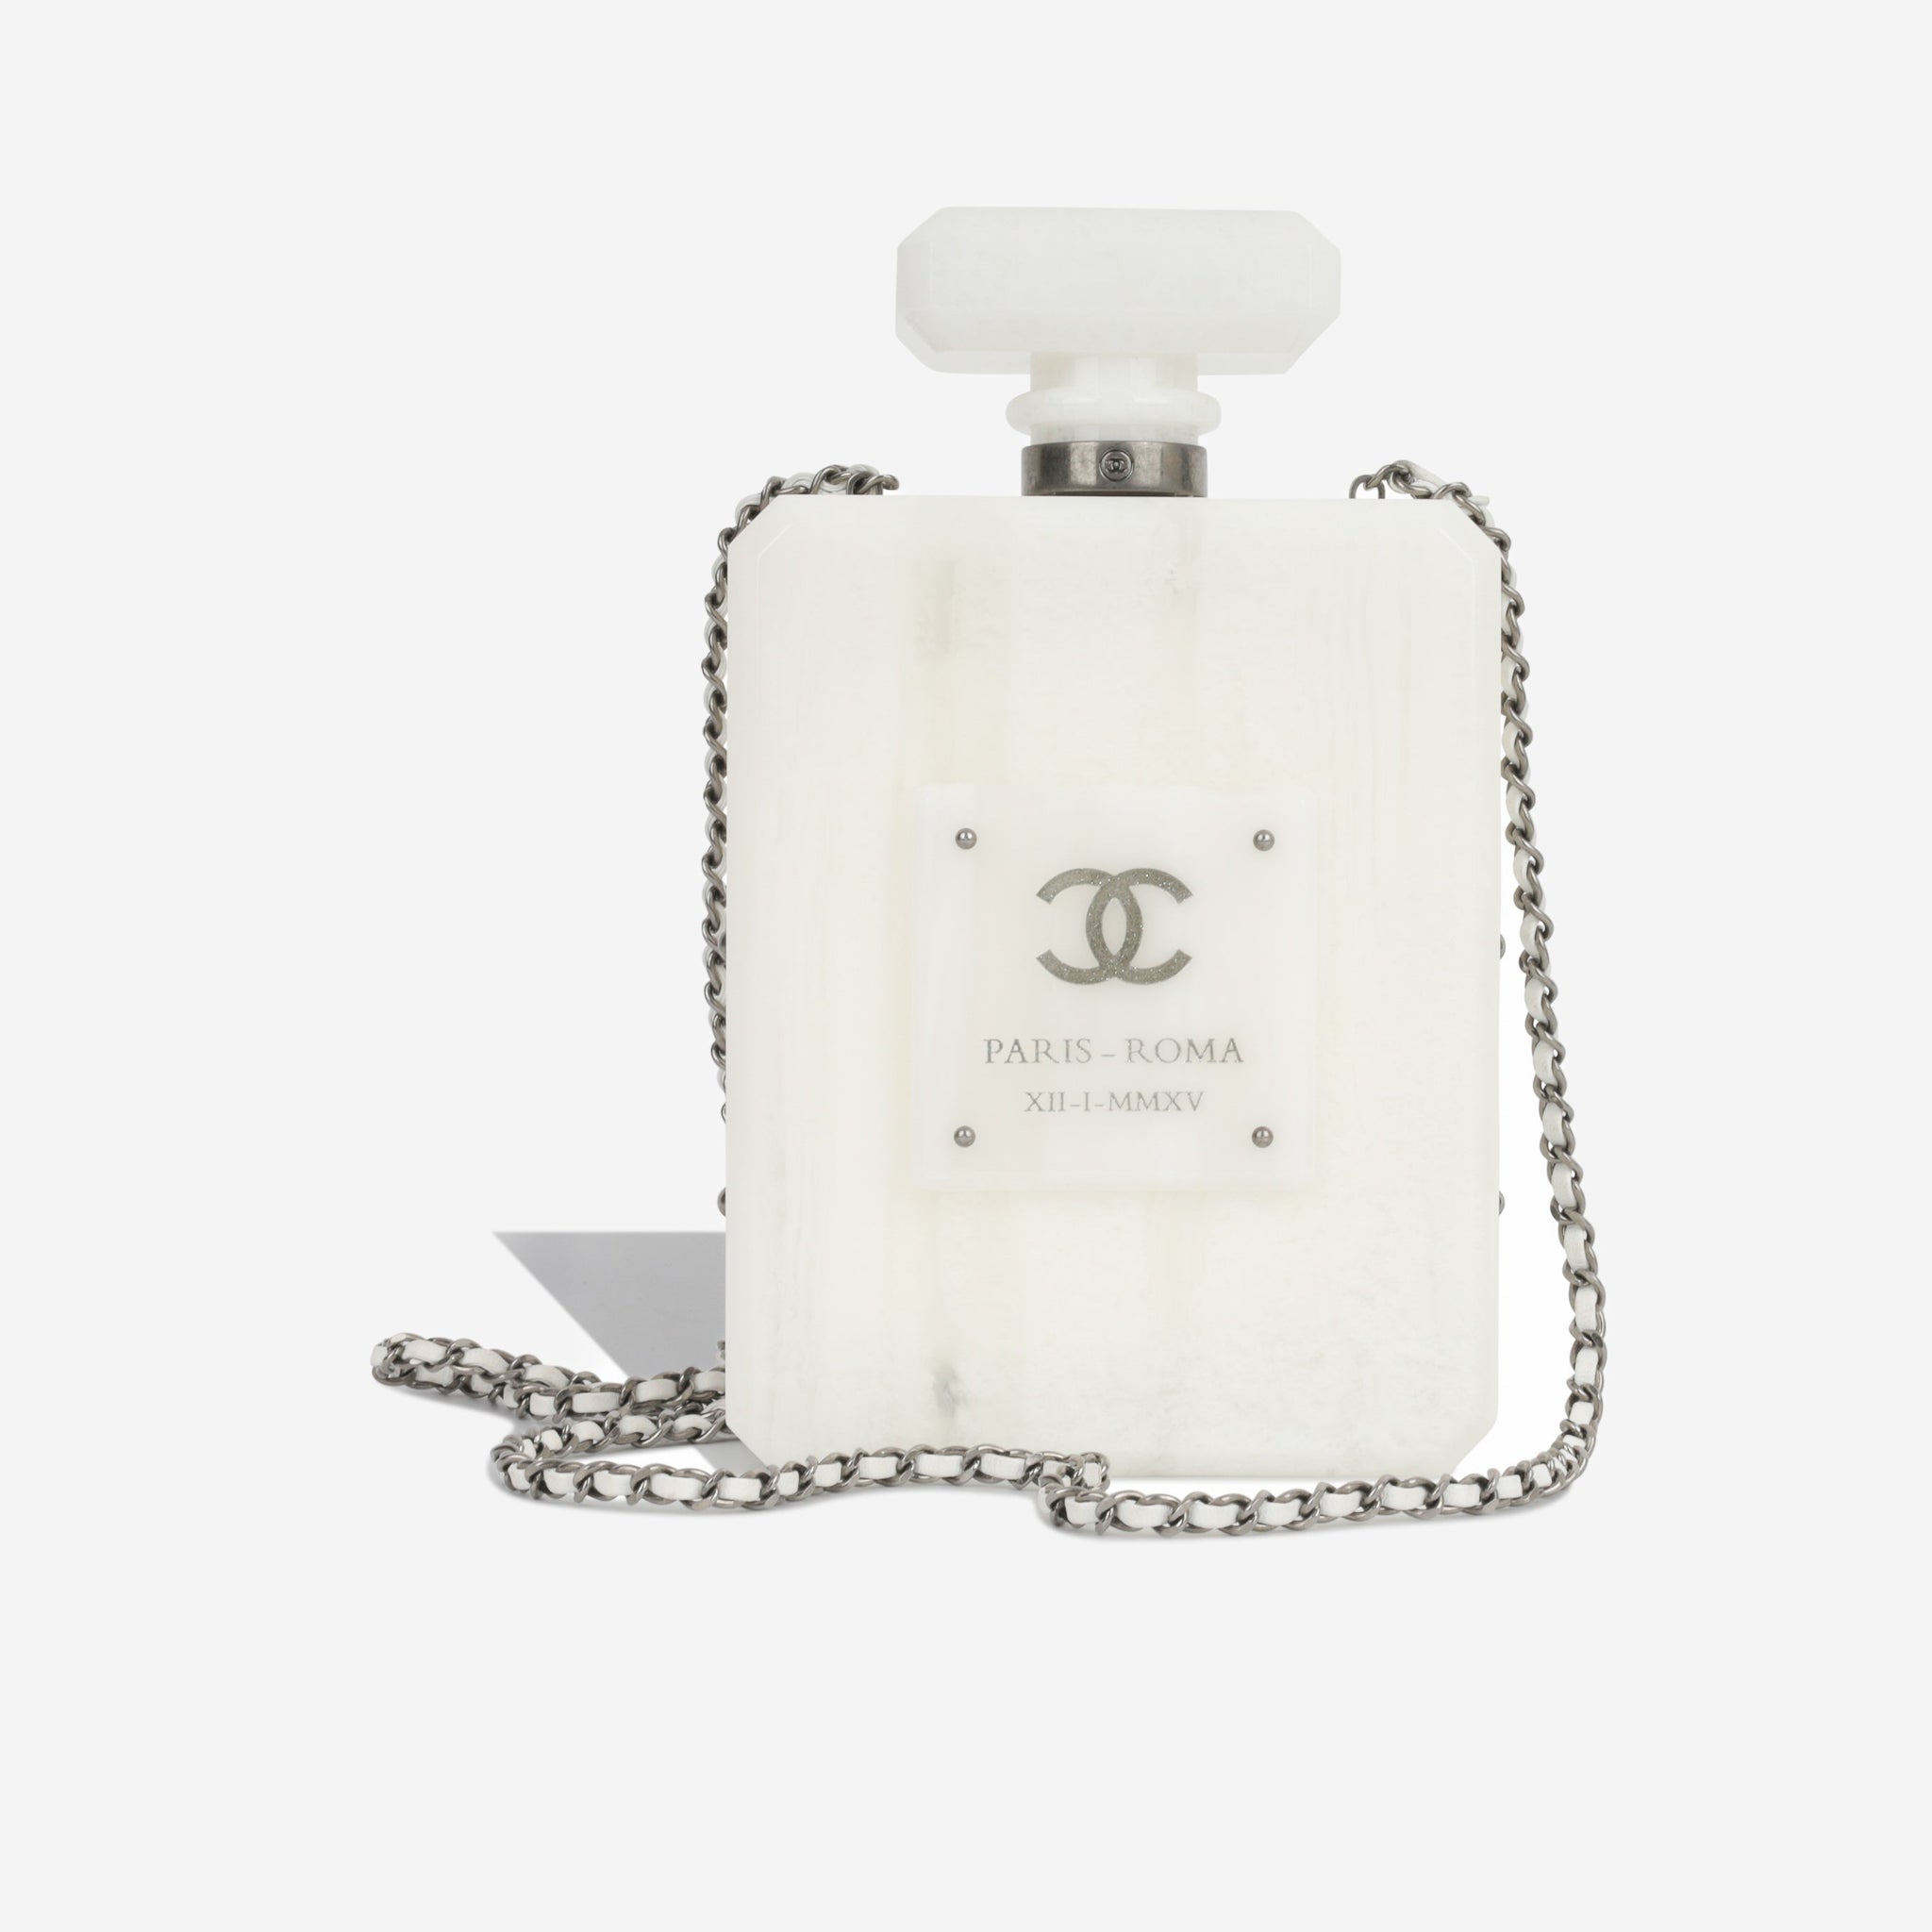 Chanel - Paris-Rome Perfume Minaudiere - Plexiglass - SHW - Pre Loved